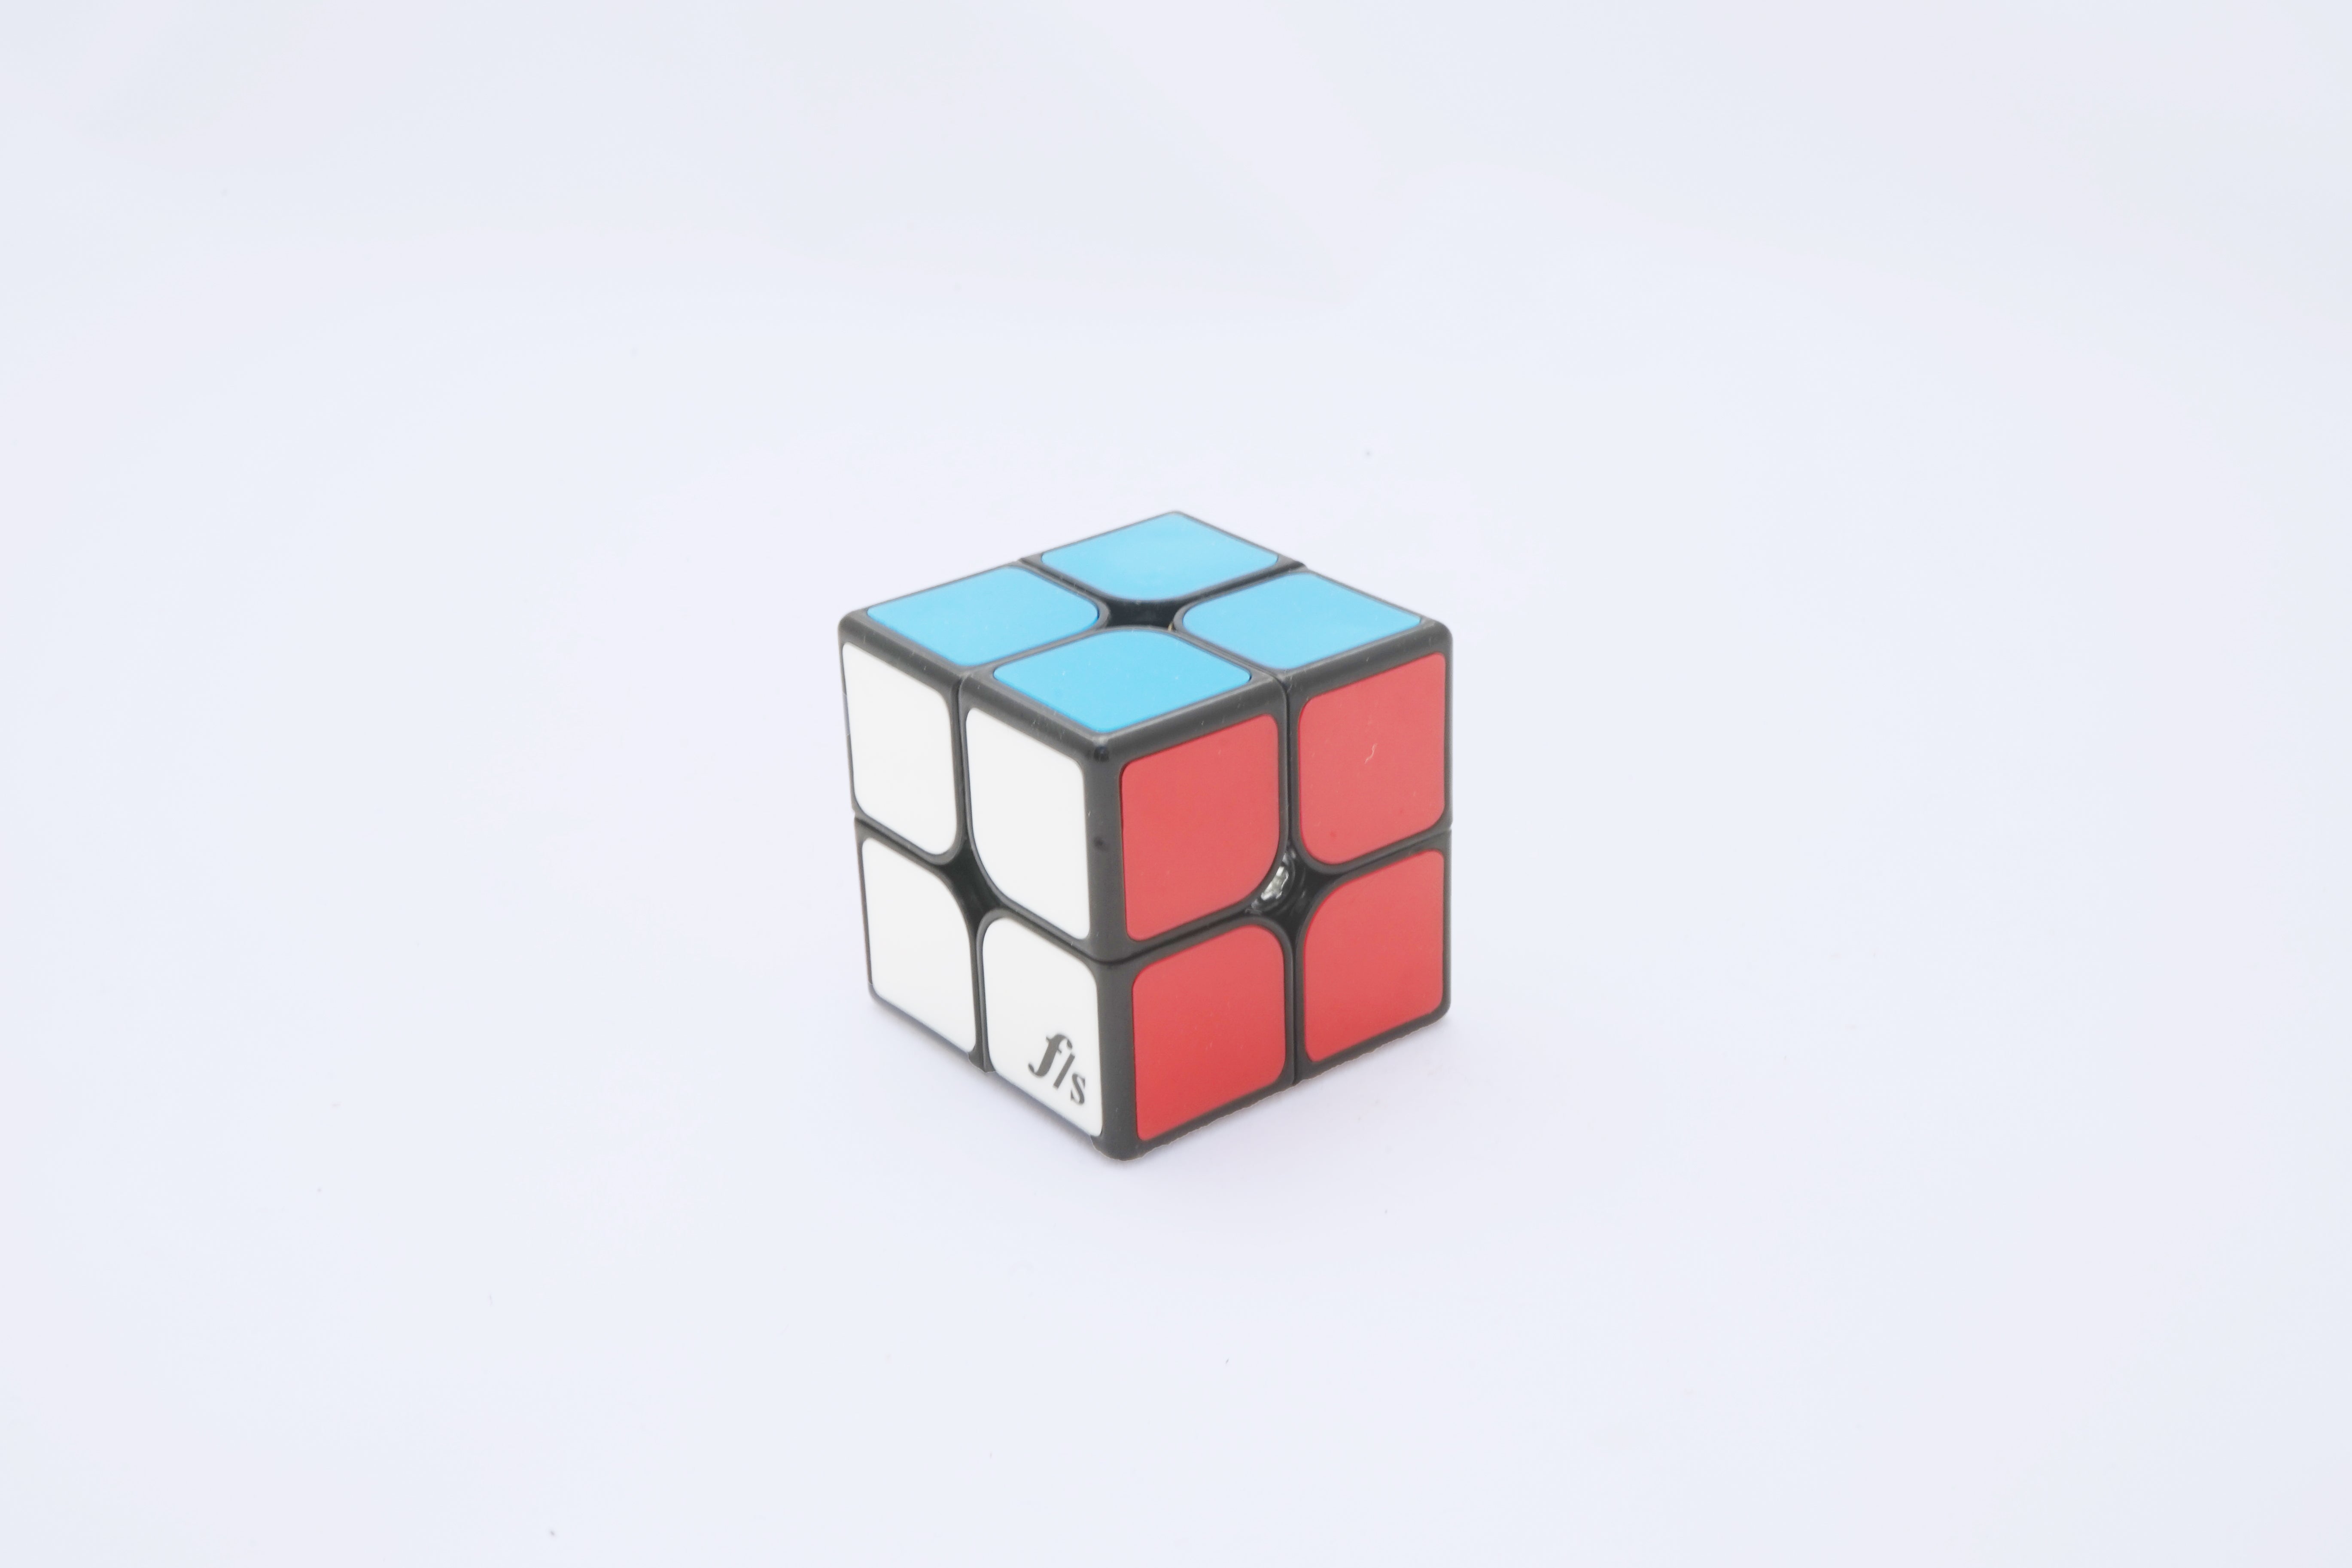 Funs Puzzle ShiShuang 2x2 (50mm) - Tiled